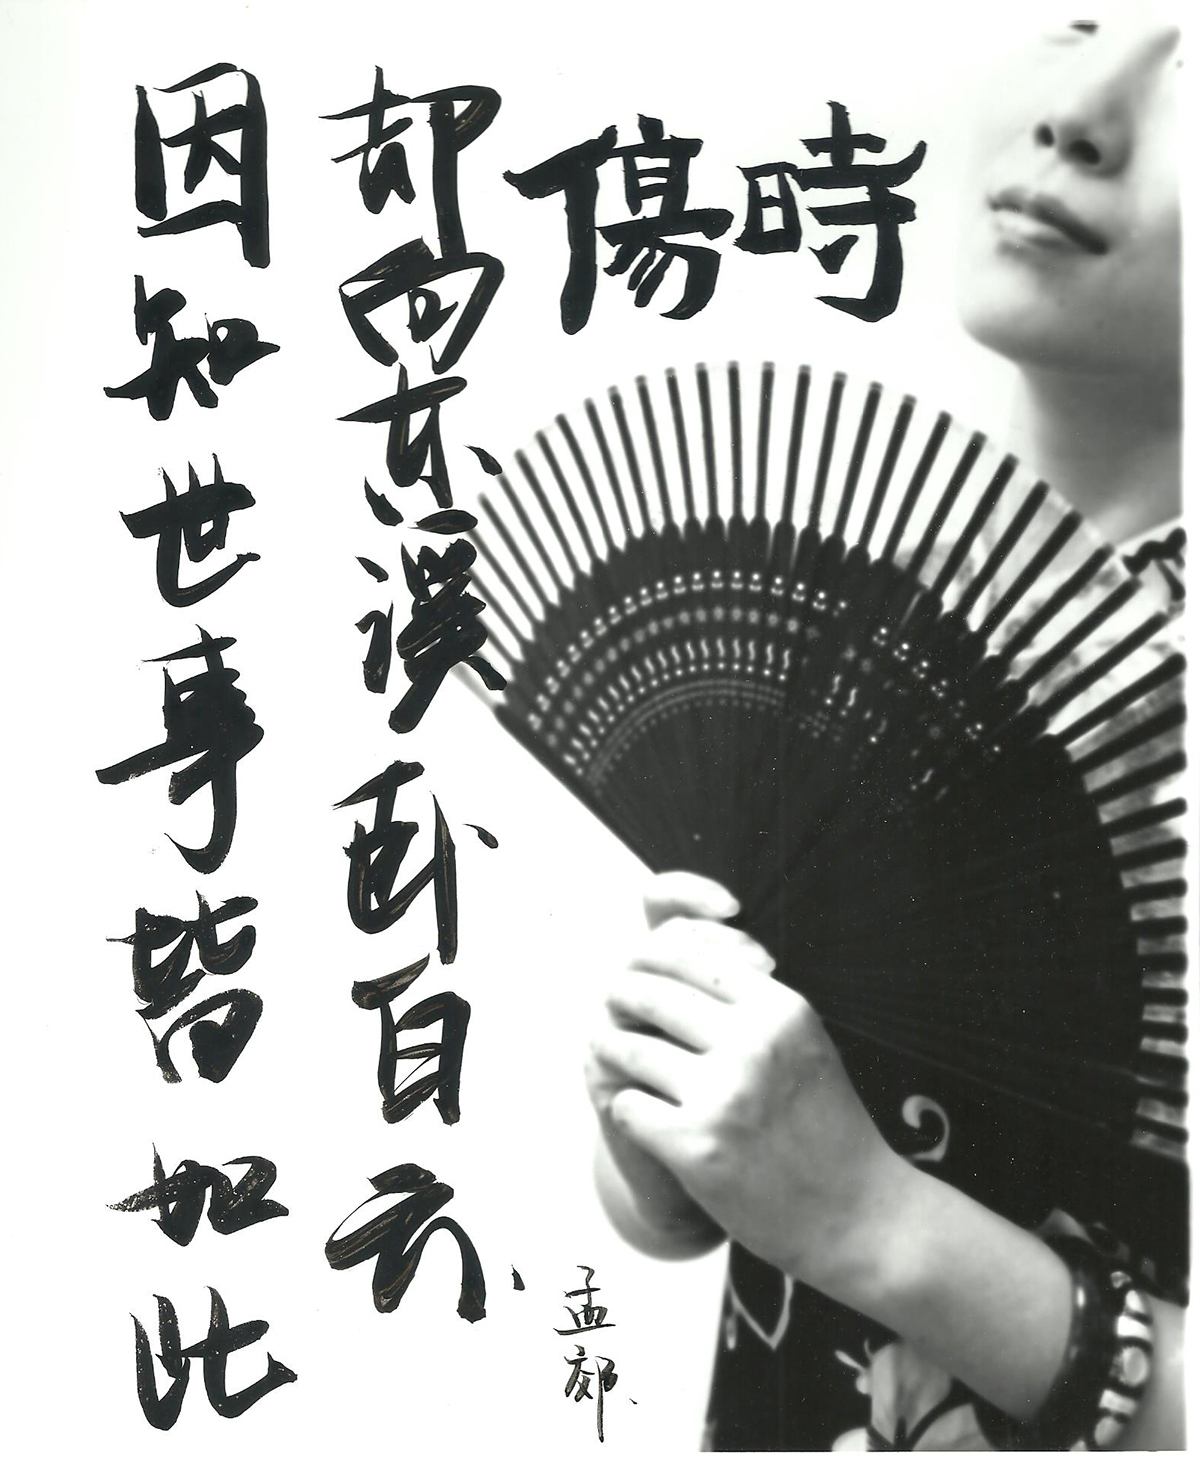 chinese B&W film film photography photo handwritting culture politics War Gun violence modern culture feminism women power